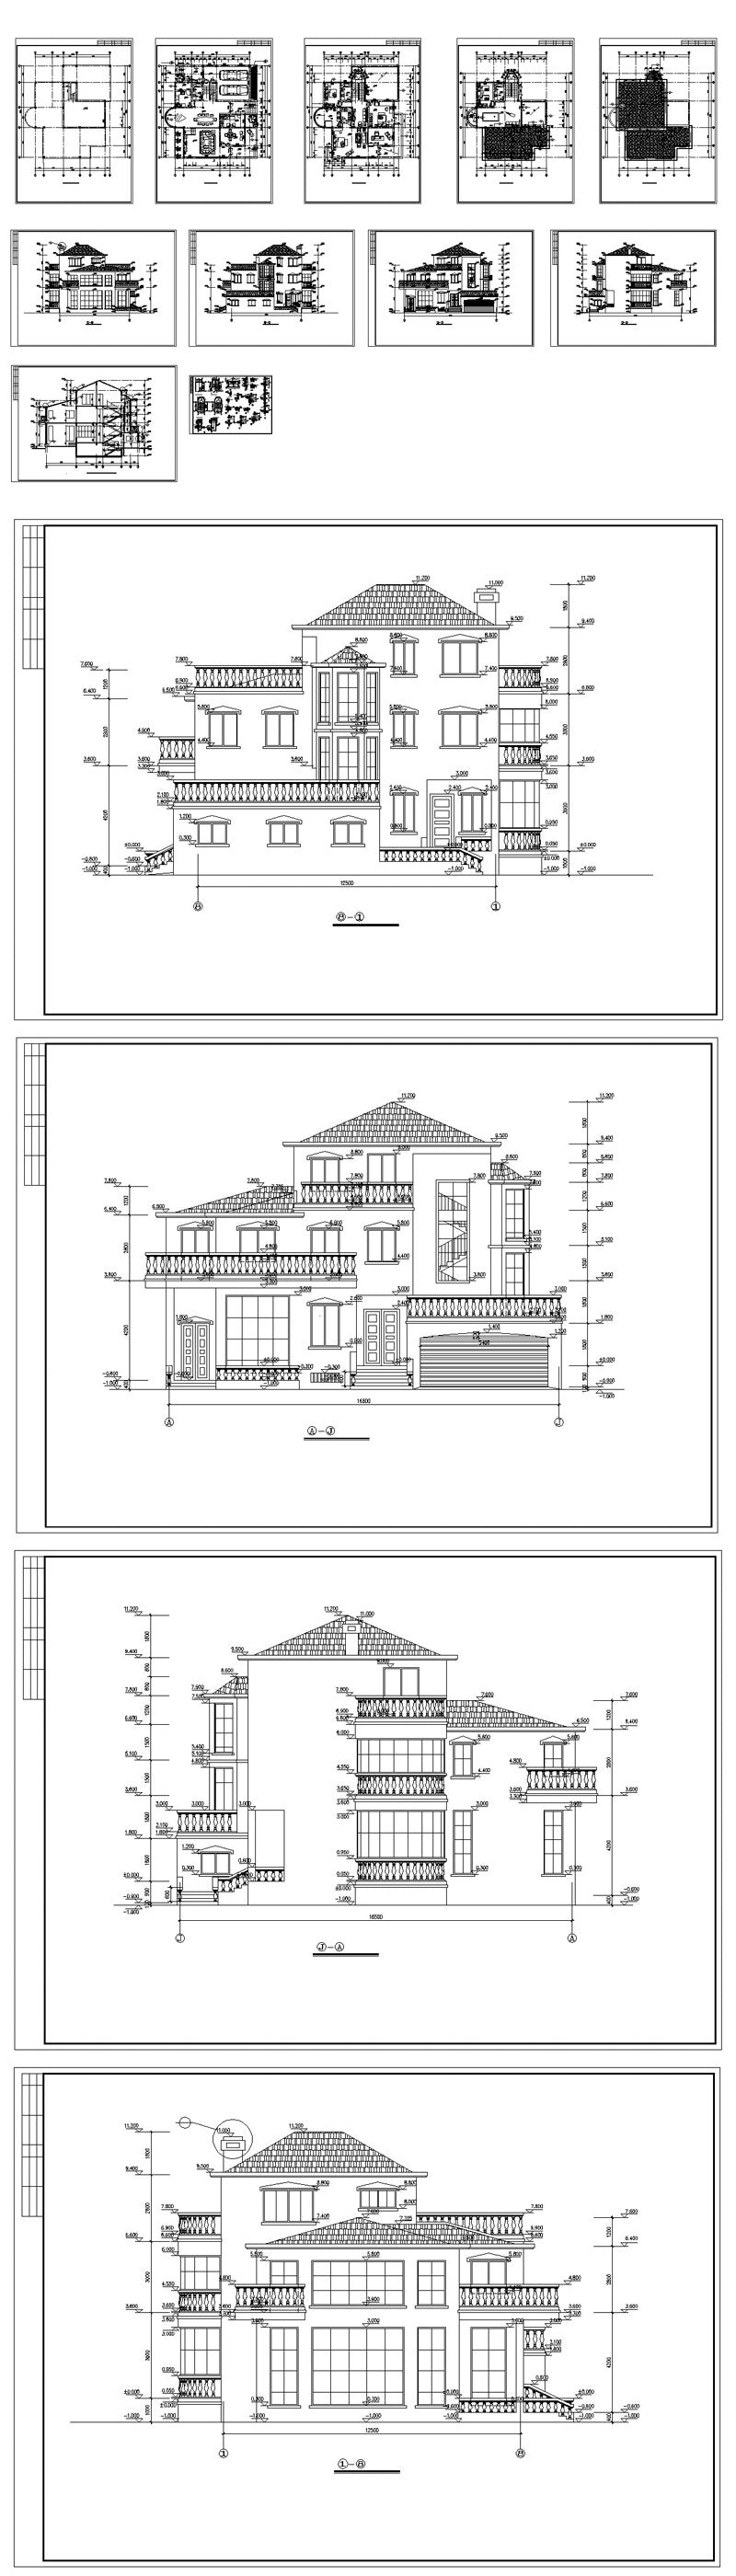 ★【Villa CAD Design,Details Project V.9】Chateau,Manor,Mansion,Villa@Autocad Blocks,Drawings,CAD Details,Elevation